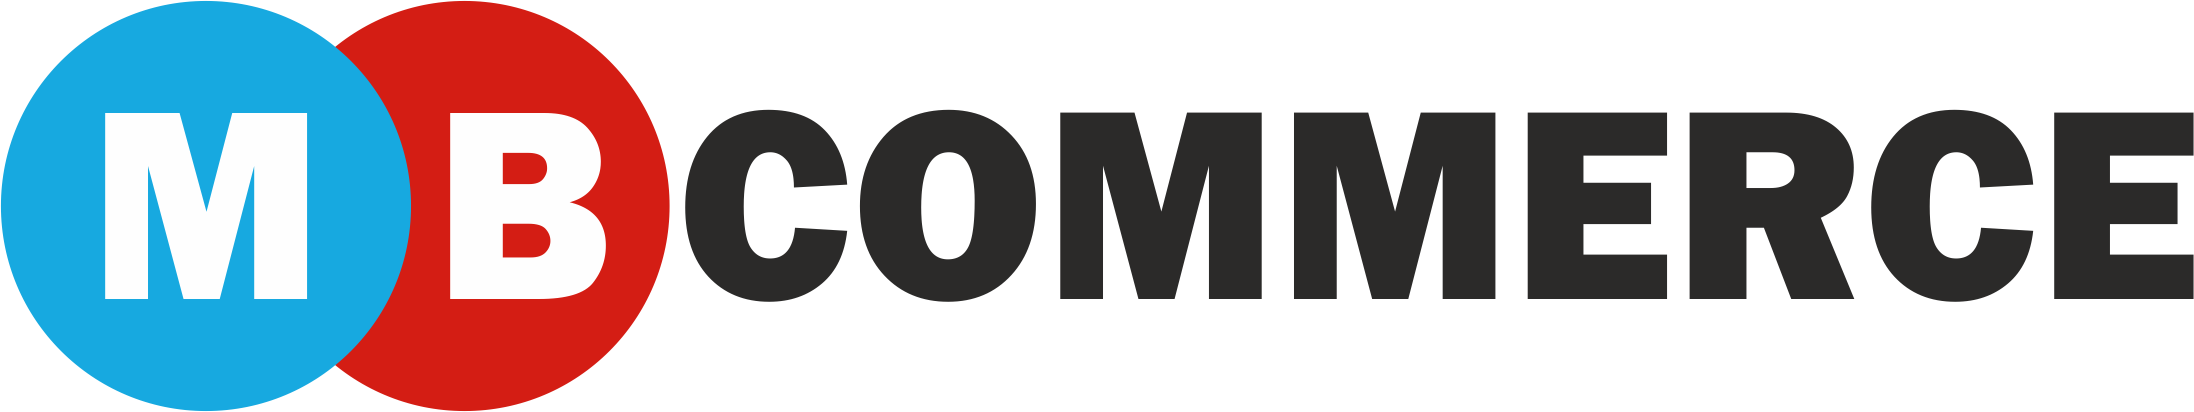 mbcommerce-logo